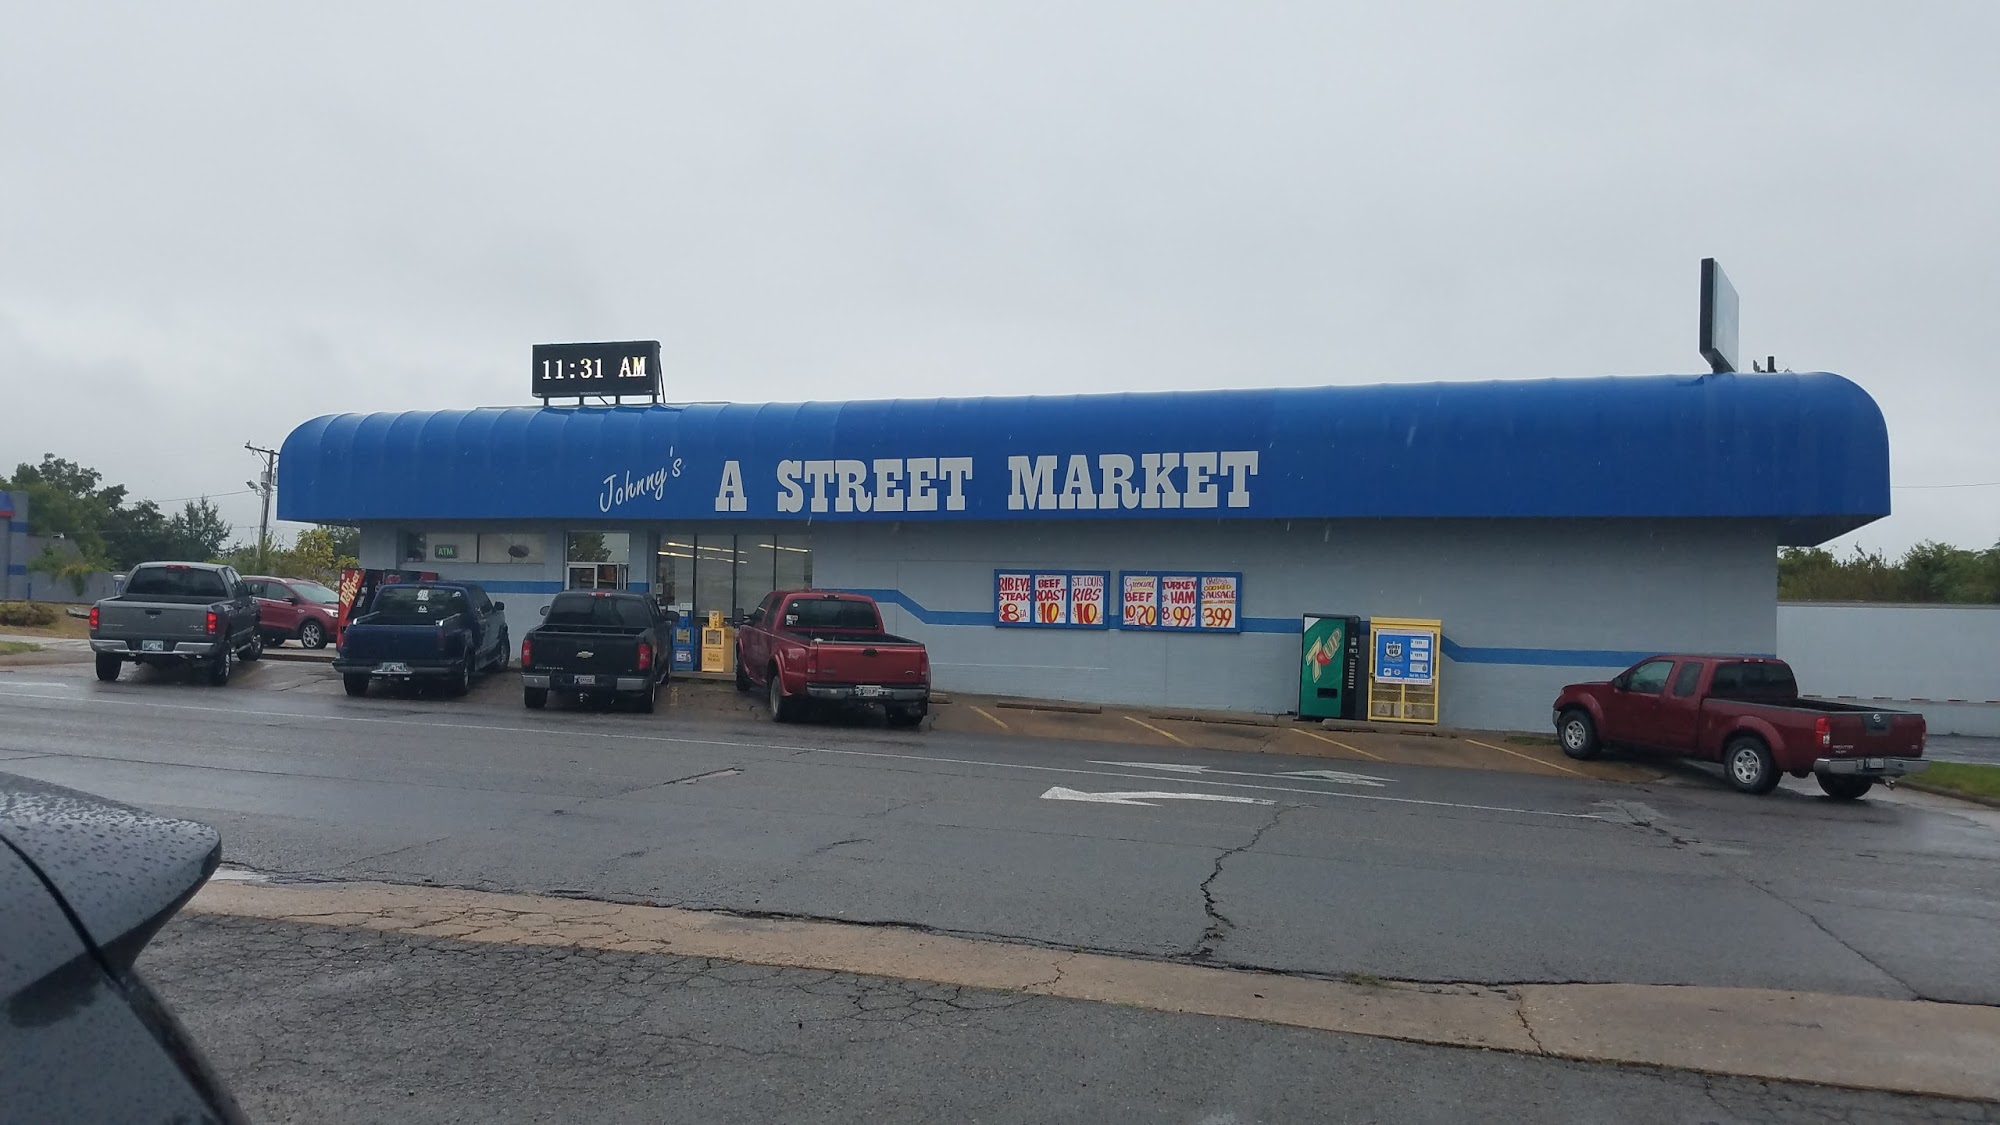 Johnny's A Street Market